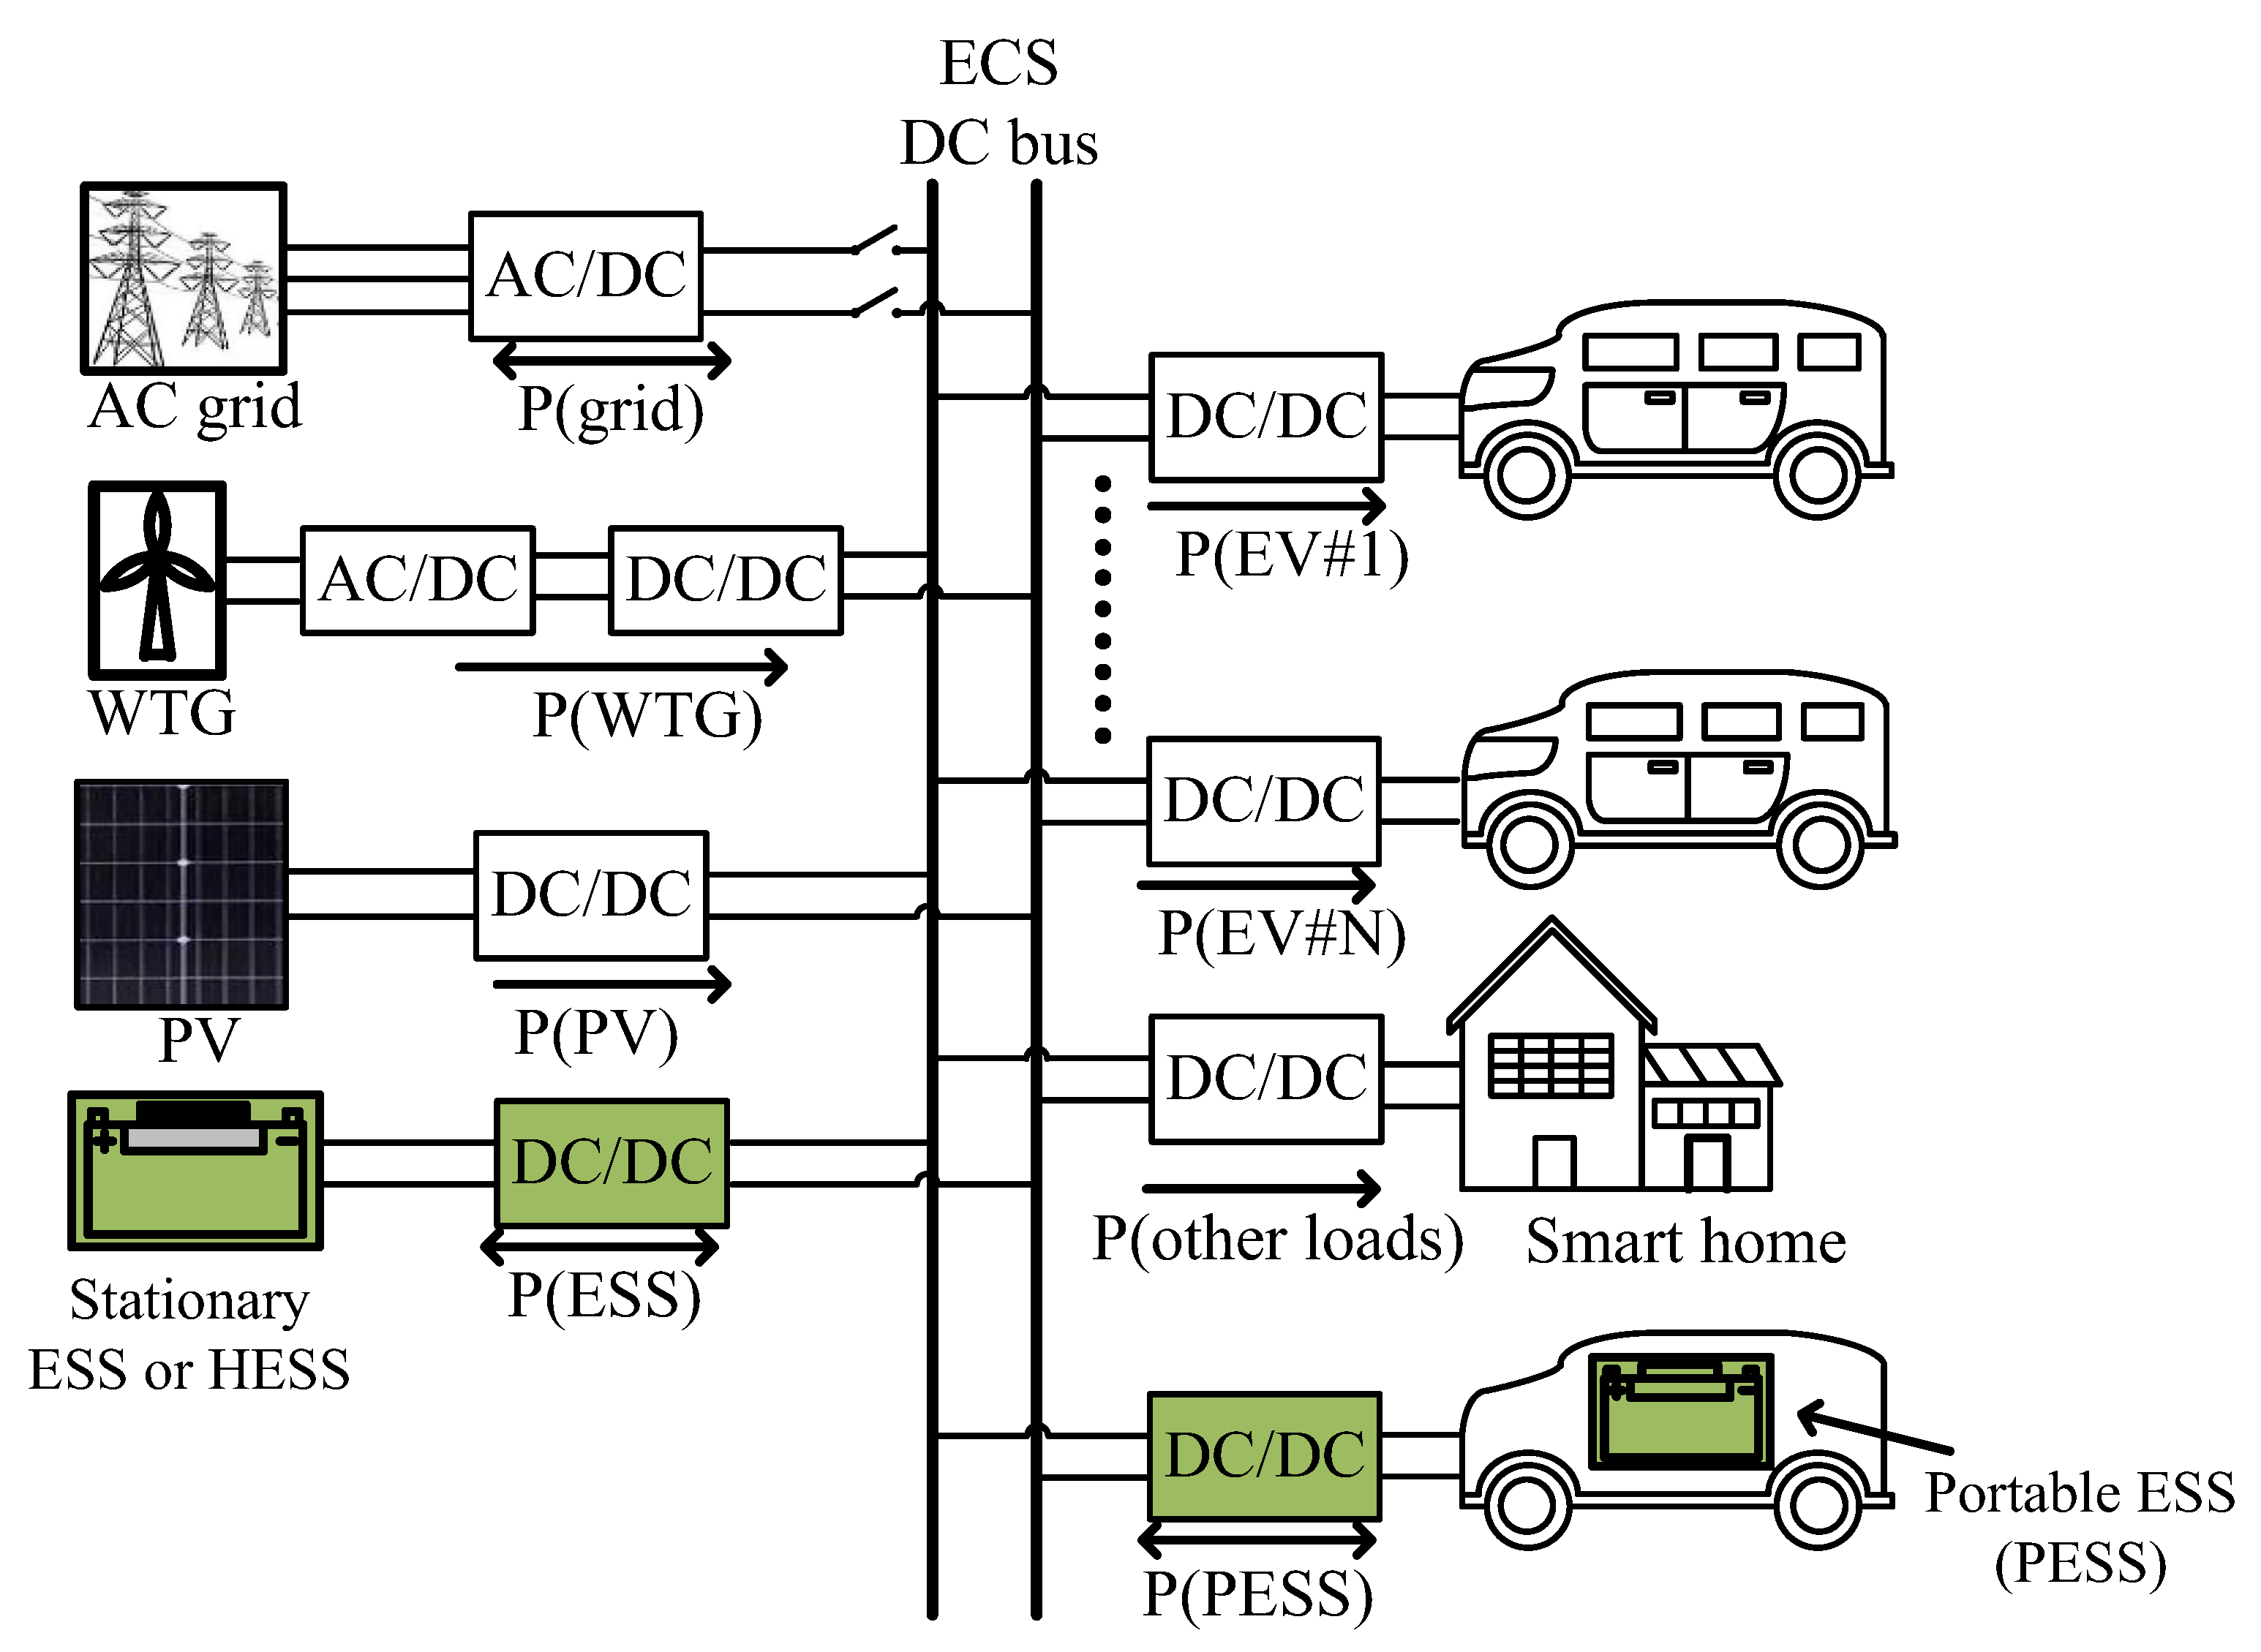 ECS - Electronic Car System